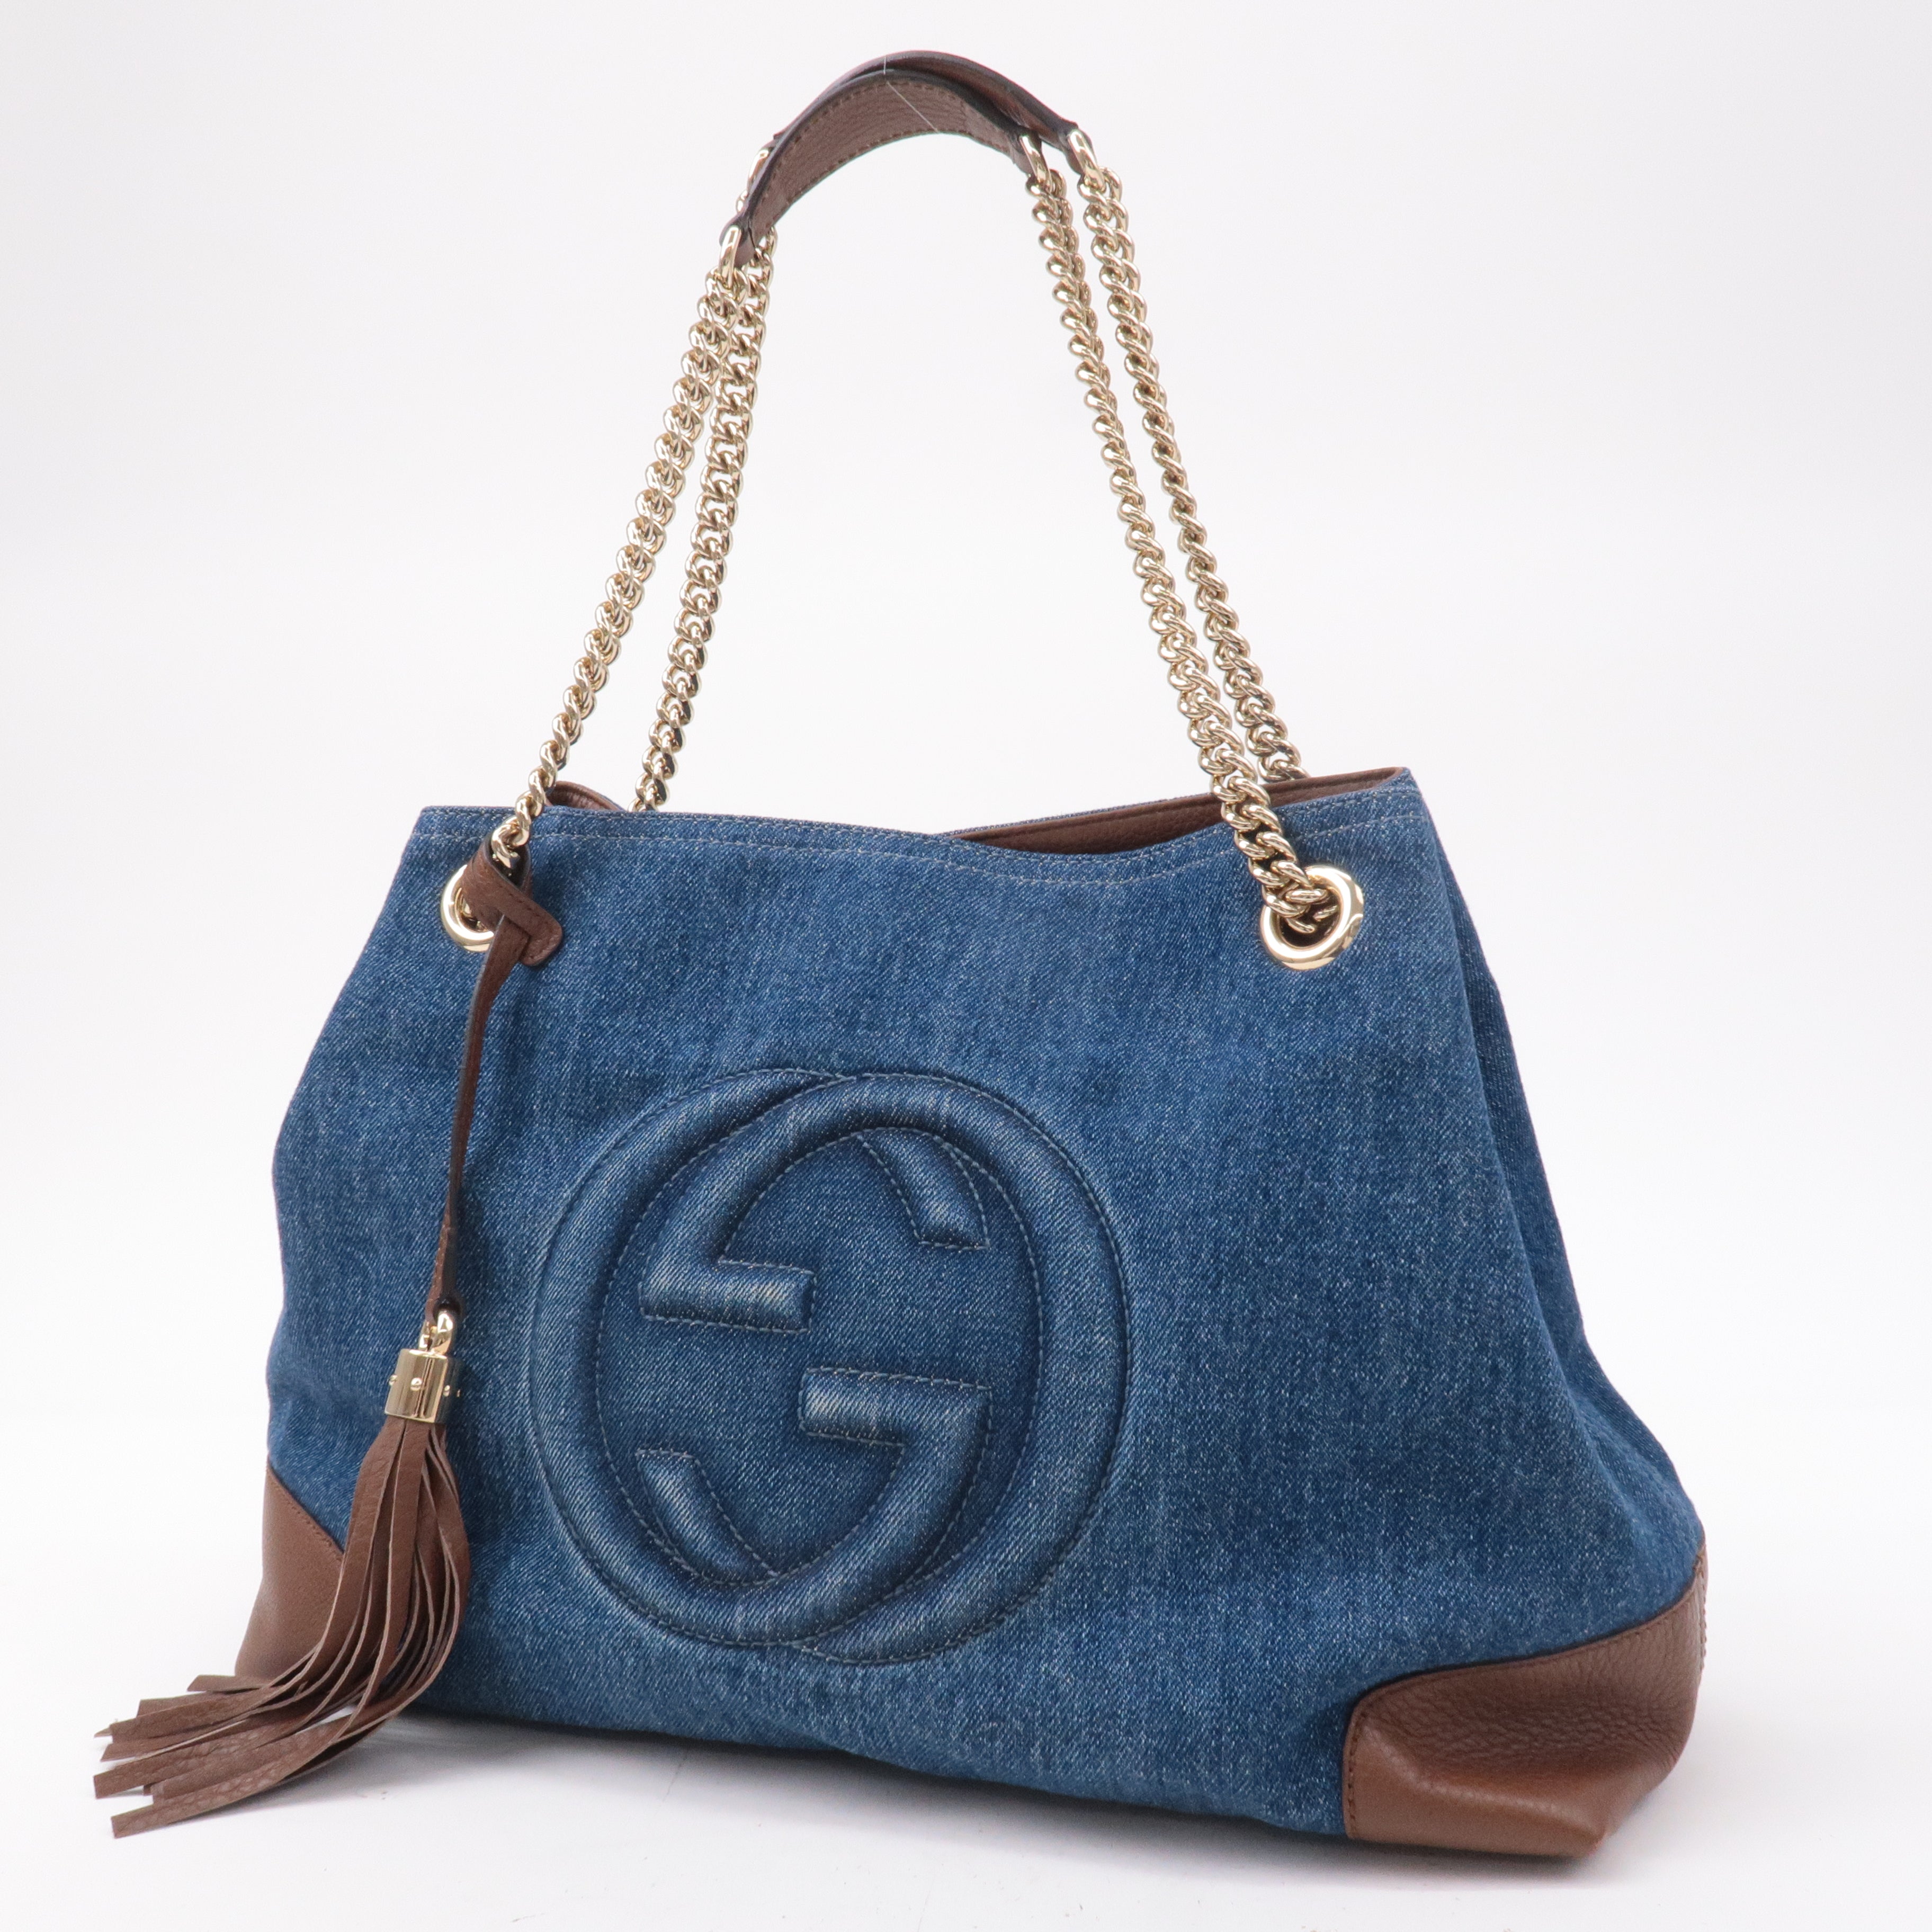 GUCCI-SOHO-Denim-Leather-Chain-Shoulder-Bag-Blue-Brown-308982 